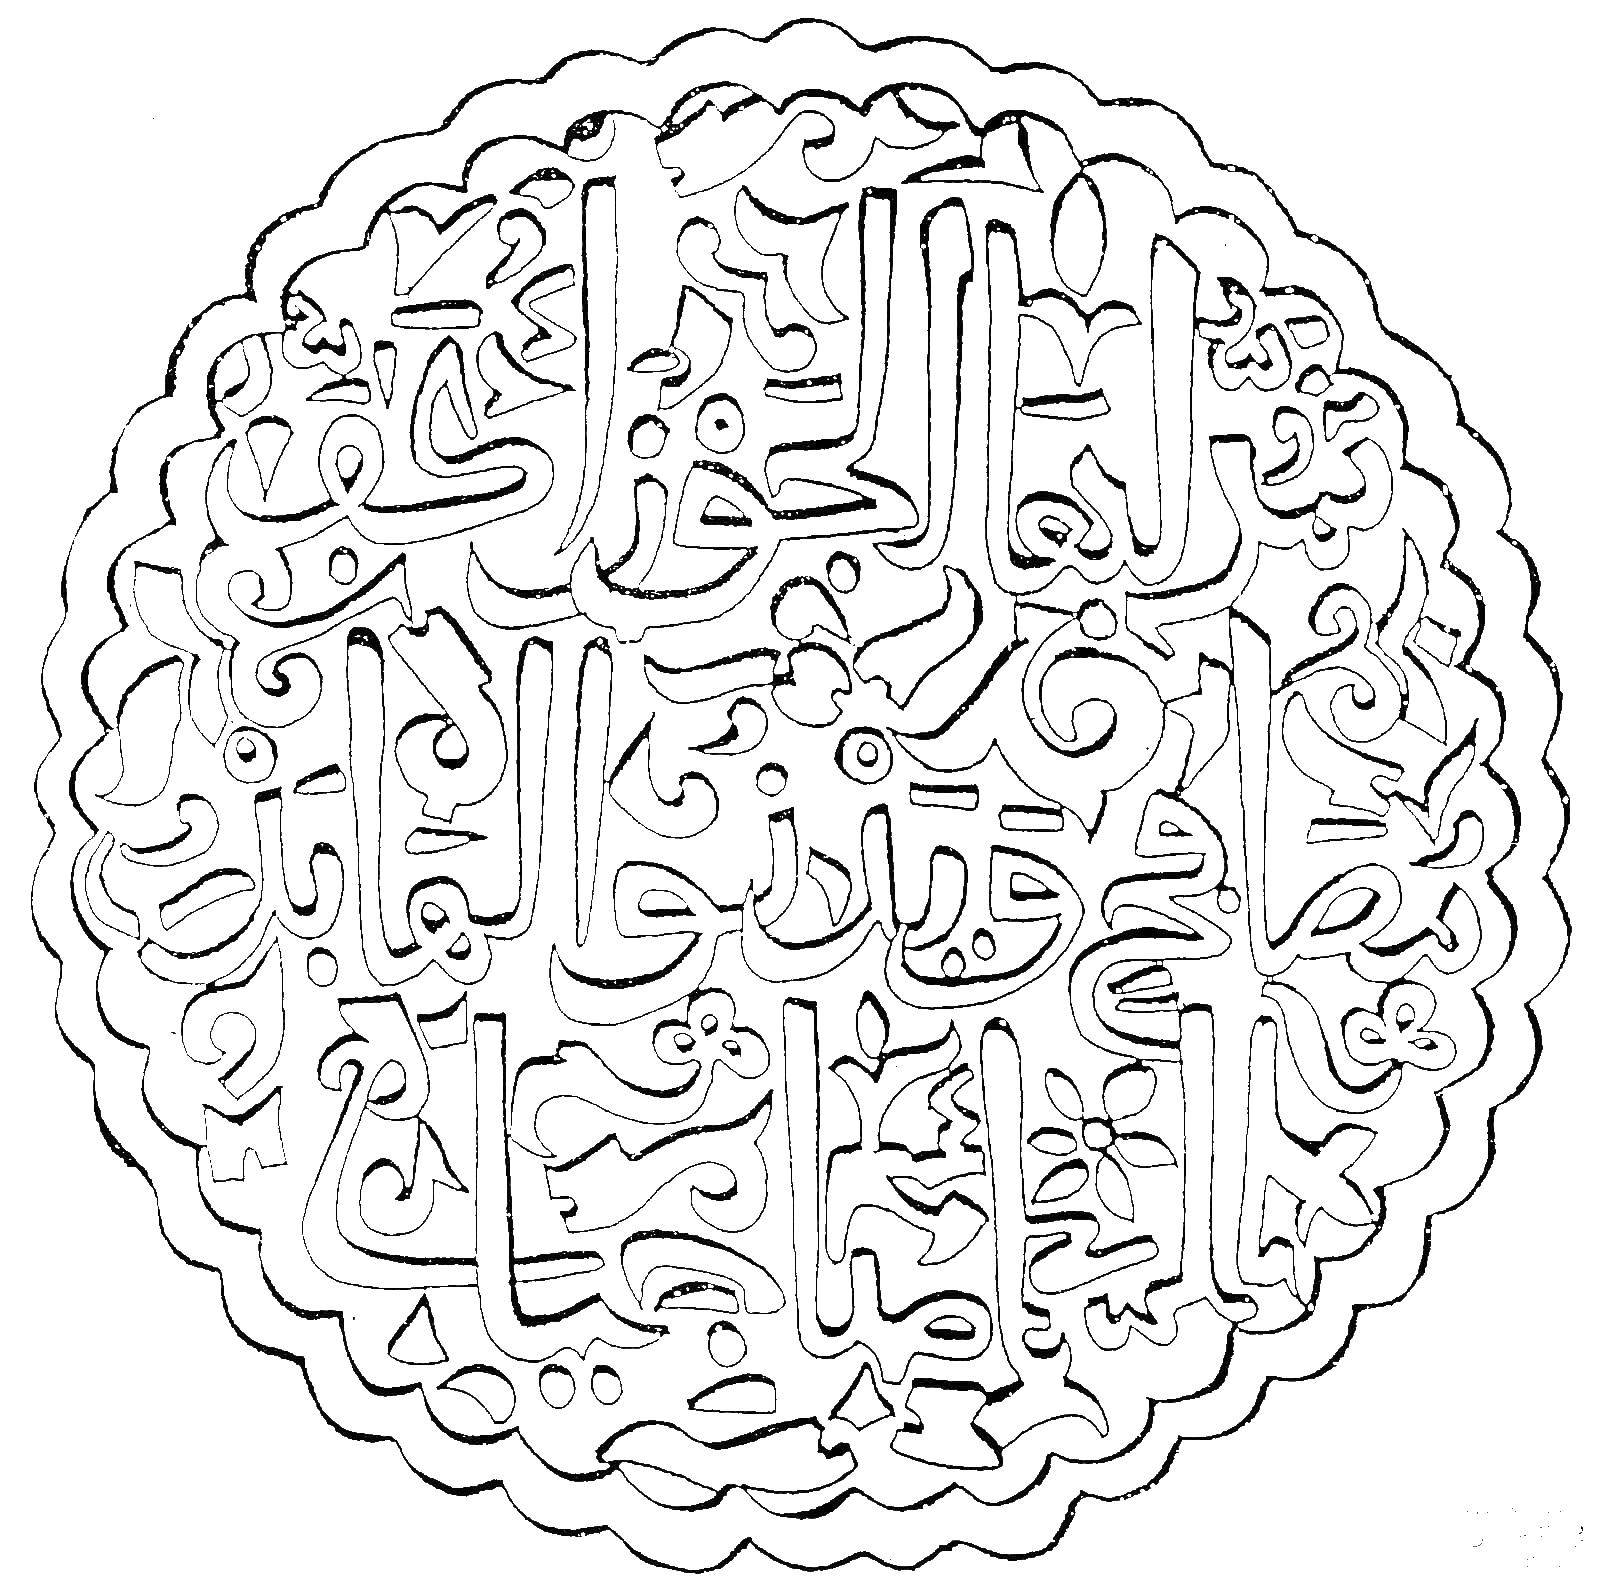 Coloring Quran. Category The Quran. Tags:  the Quran.